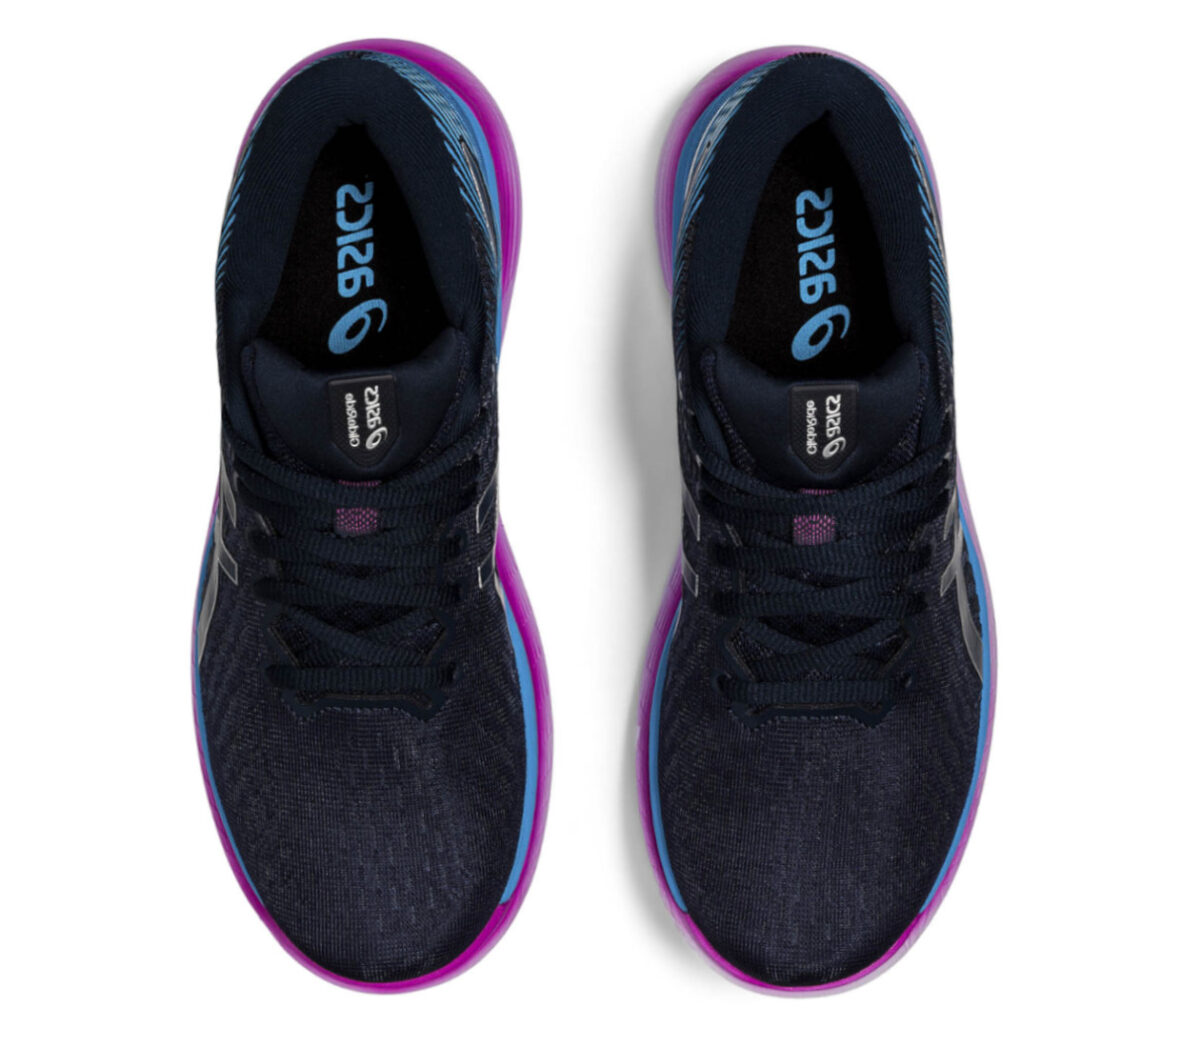 tomaia scarpa da running per donna asics glideride 2 blu e rosa